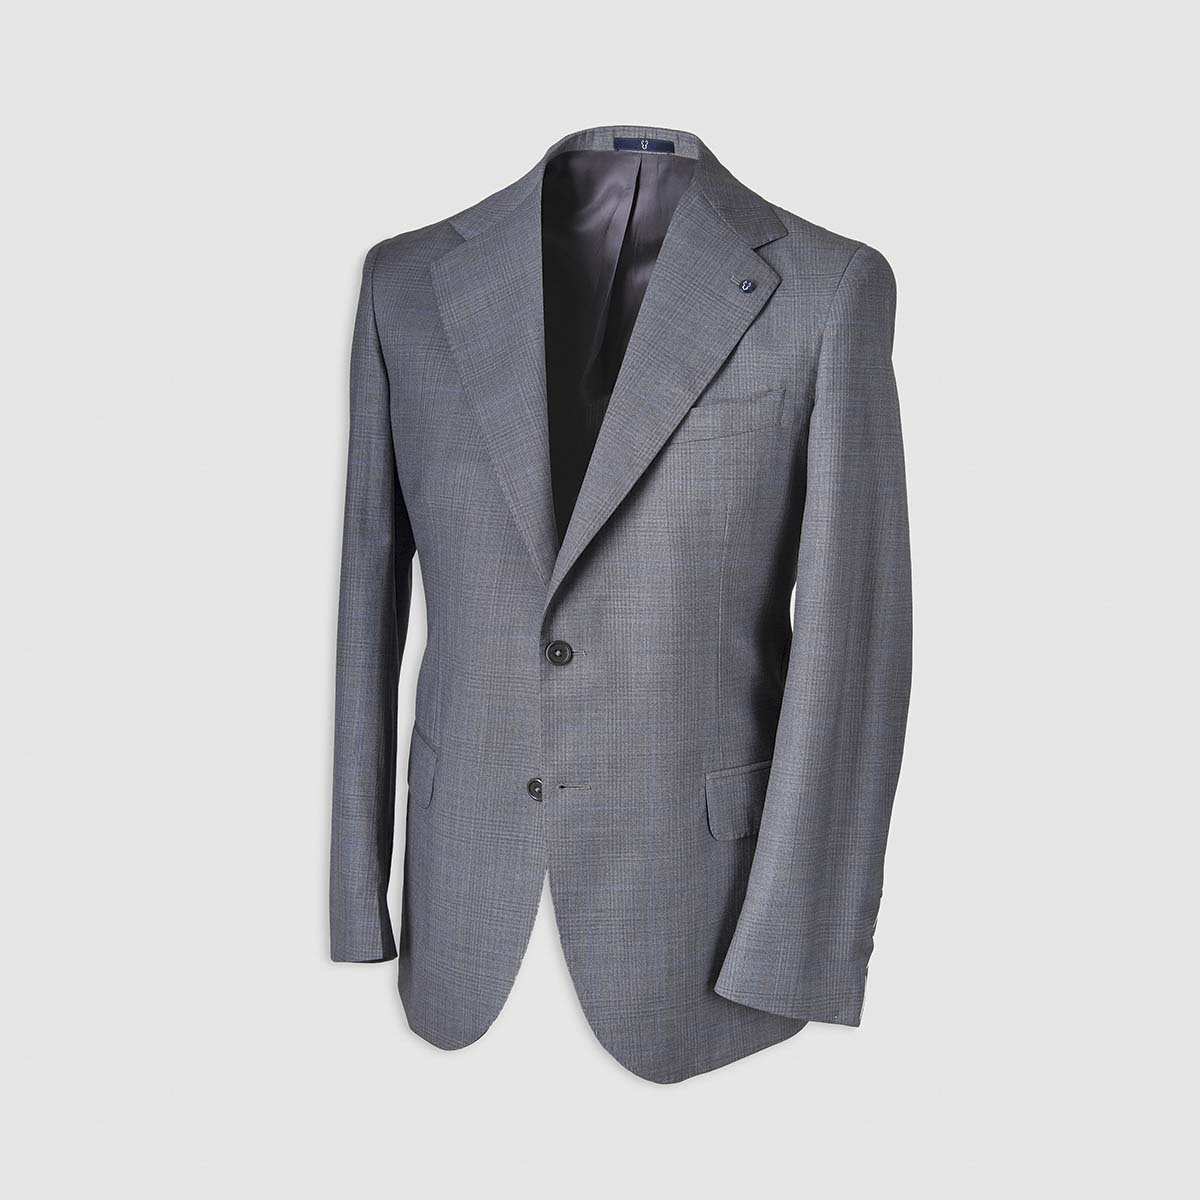 Grey Single-Breasted Blazer in 130s Four Seasons Wool Melillo 1970 on sale 2022 2